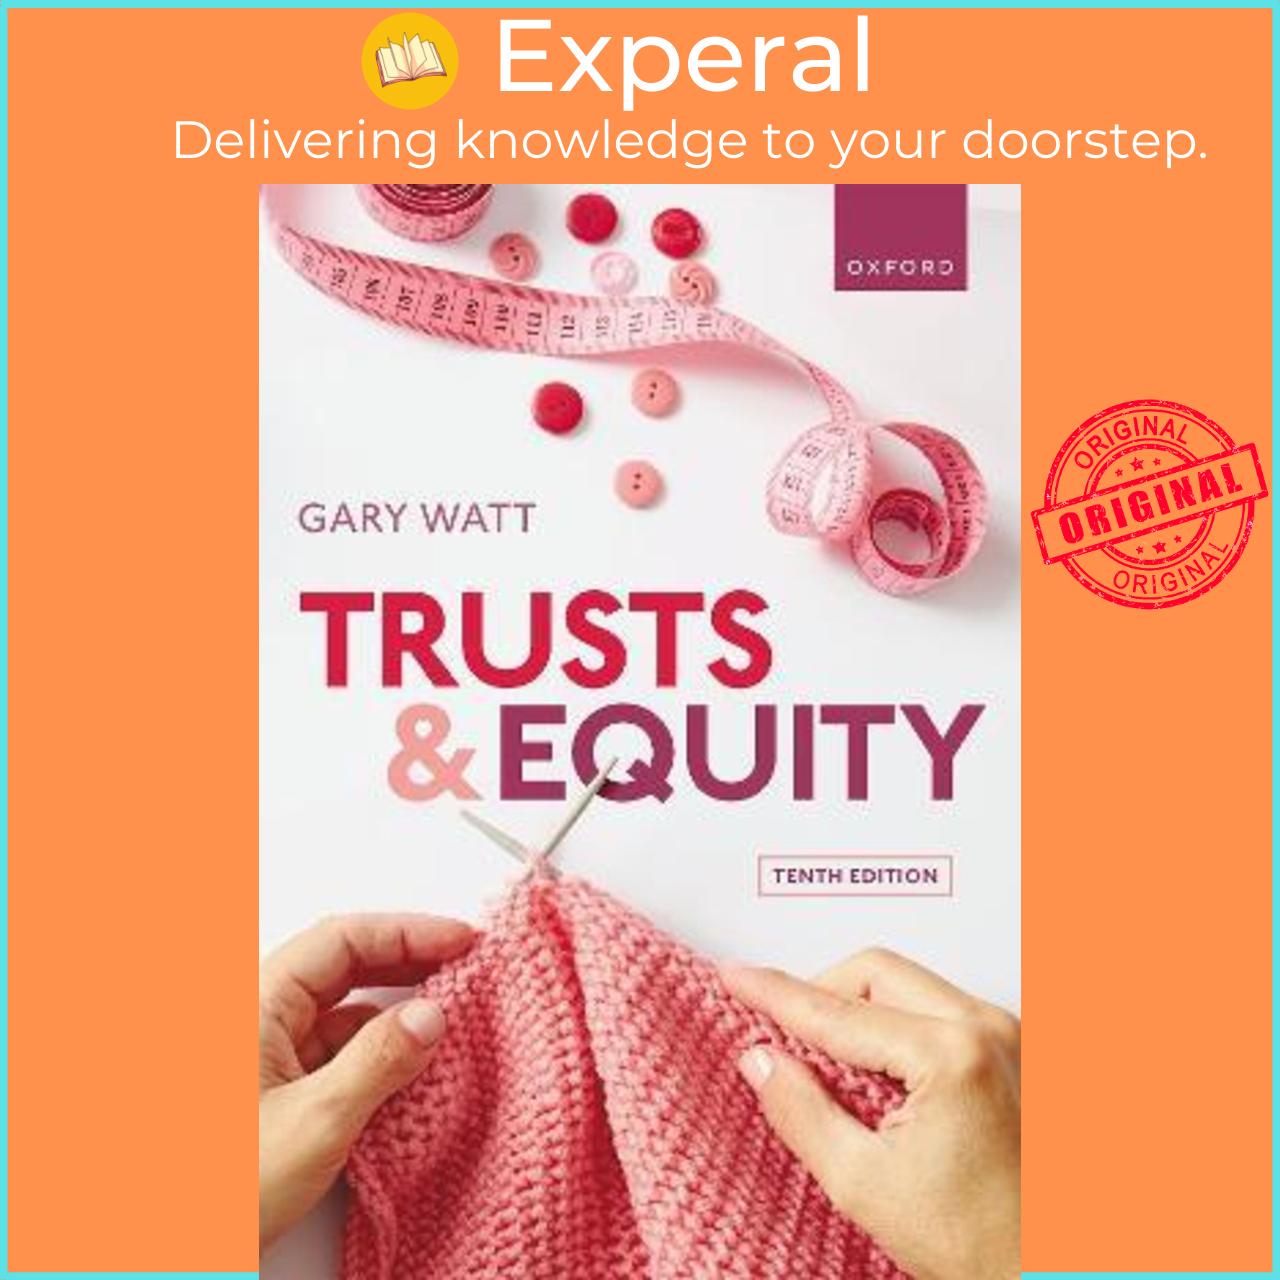 Sách - Trusts & Equity by Gary Watt (UK edition, paperback)